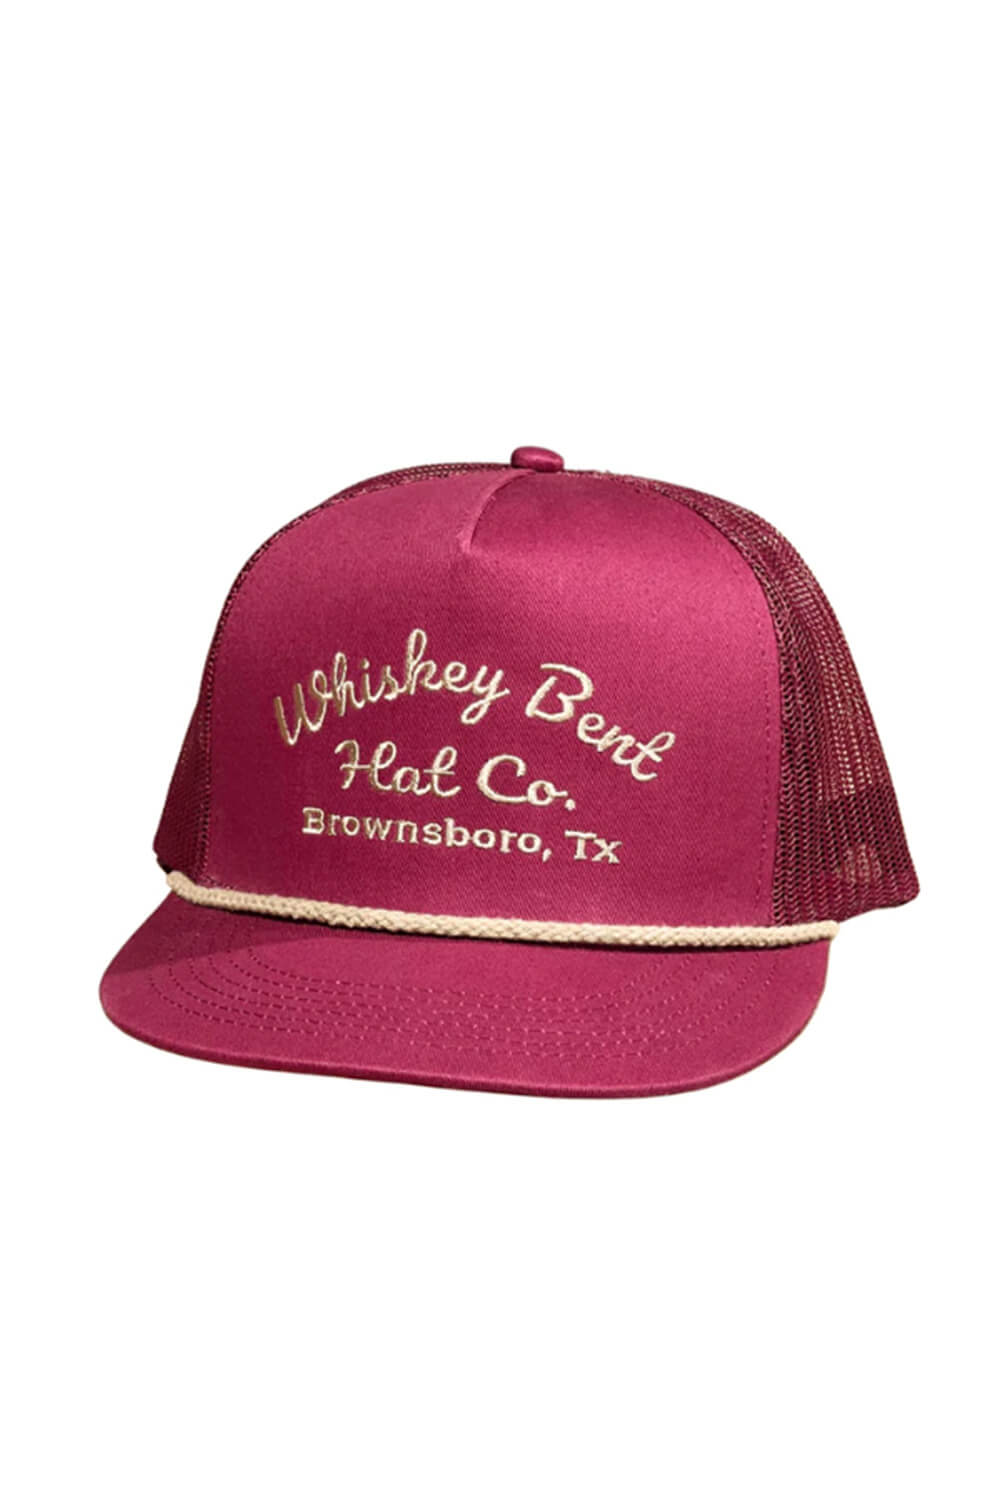 Whiskey Bent Sale Barn Trucker Hat for Men in Maroon | SLBRN-M – Glik's